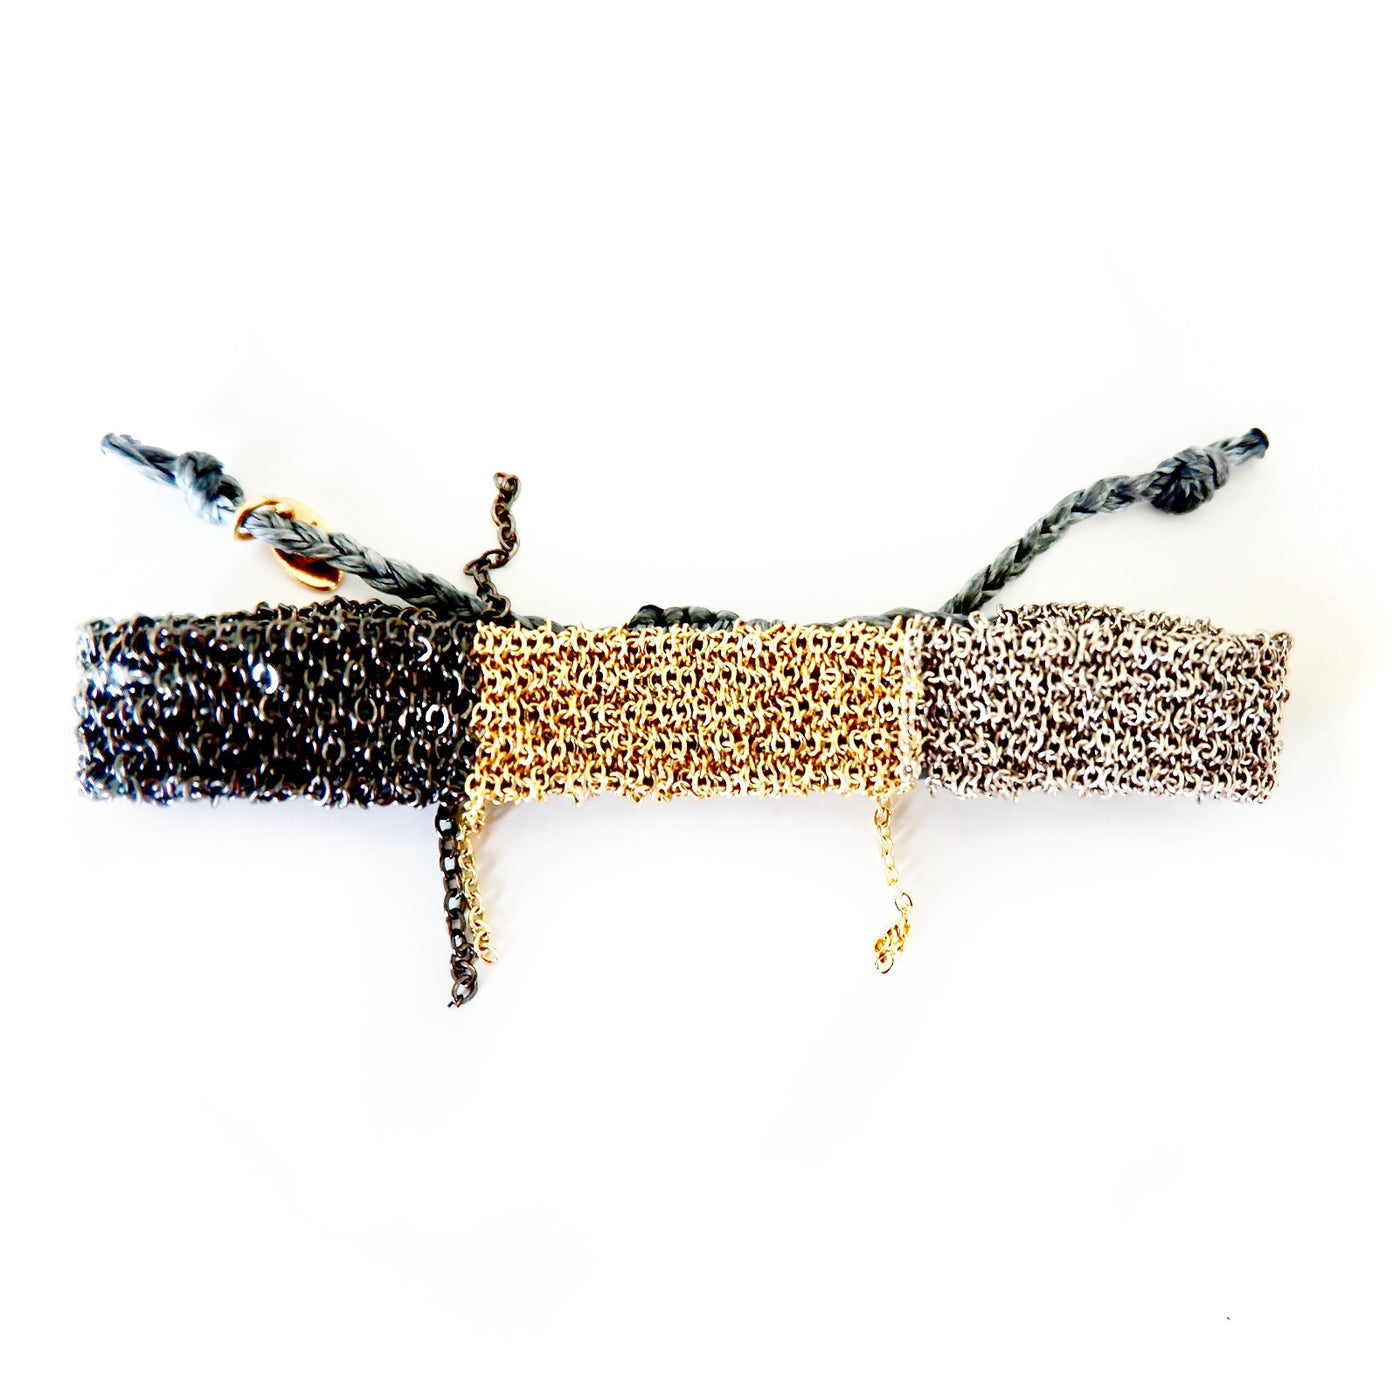 tri color adjustable chains bracelet